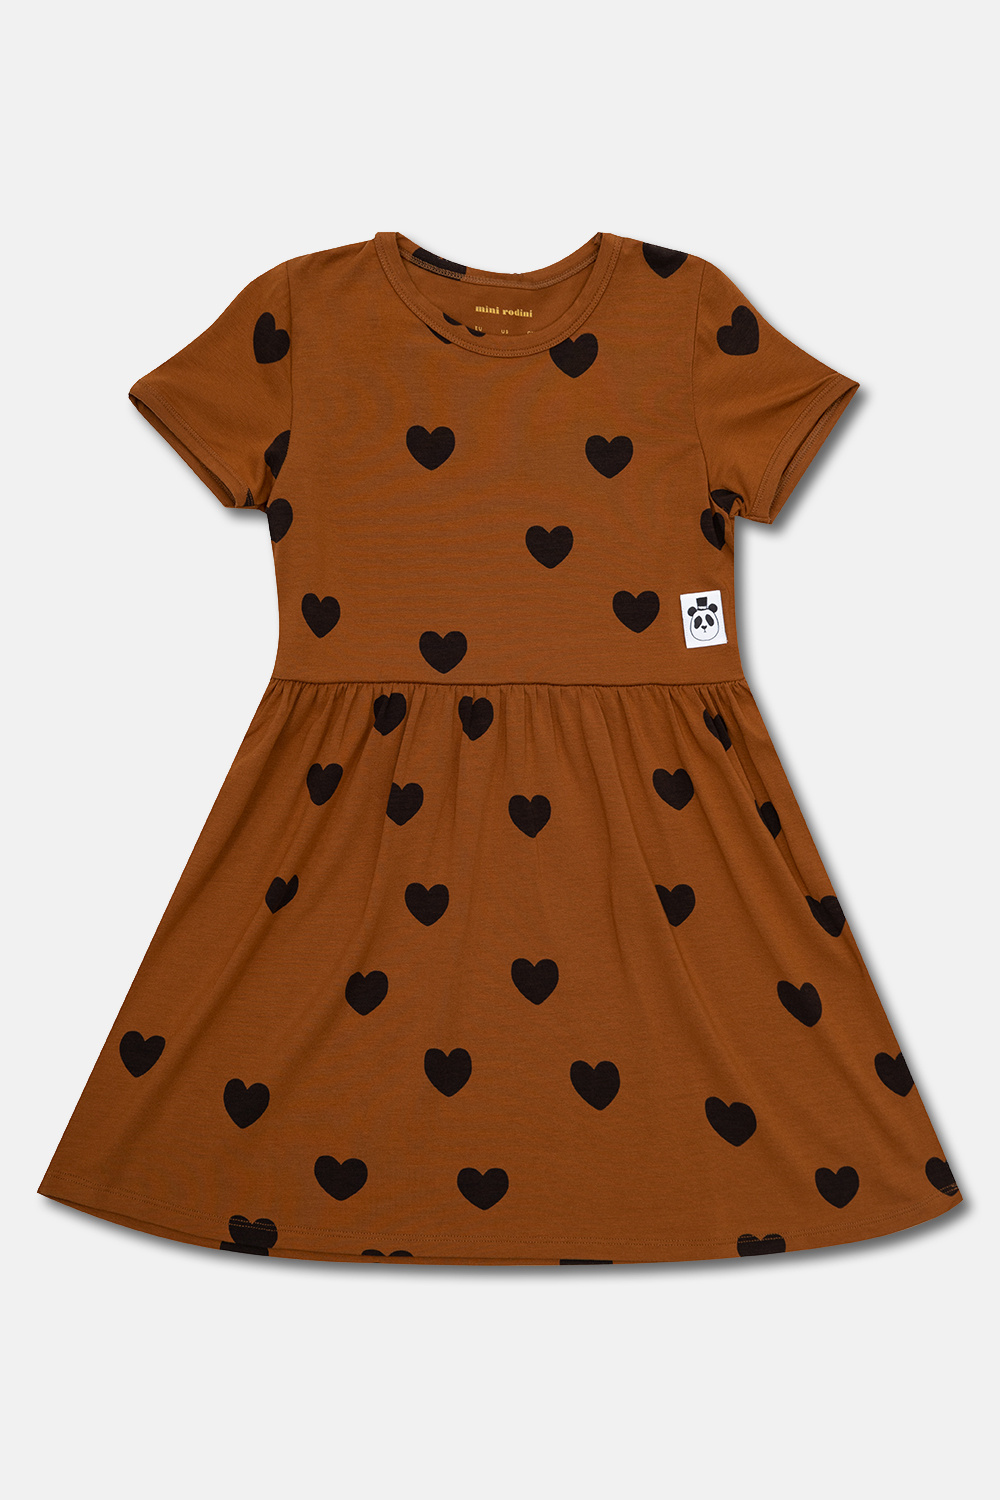 Mini Rodini Dress with hearts print